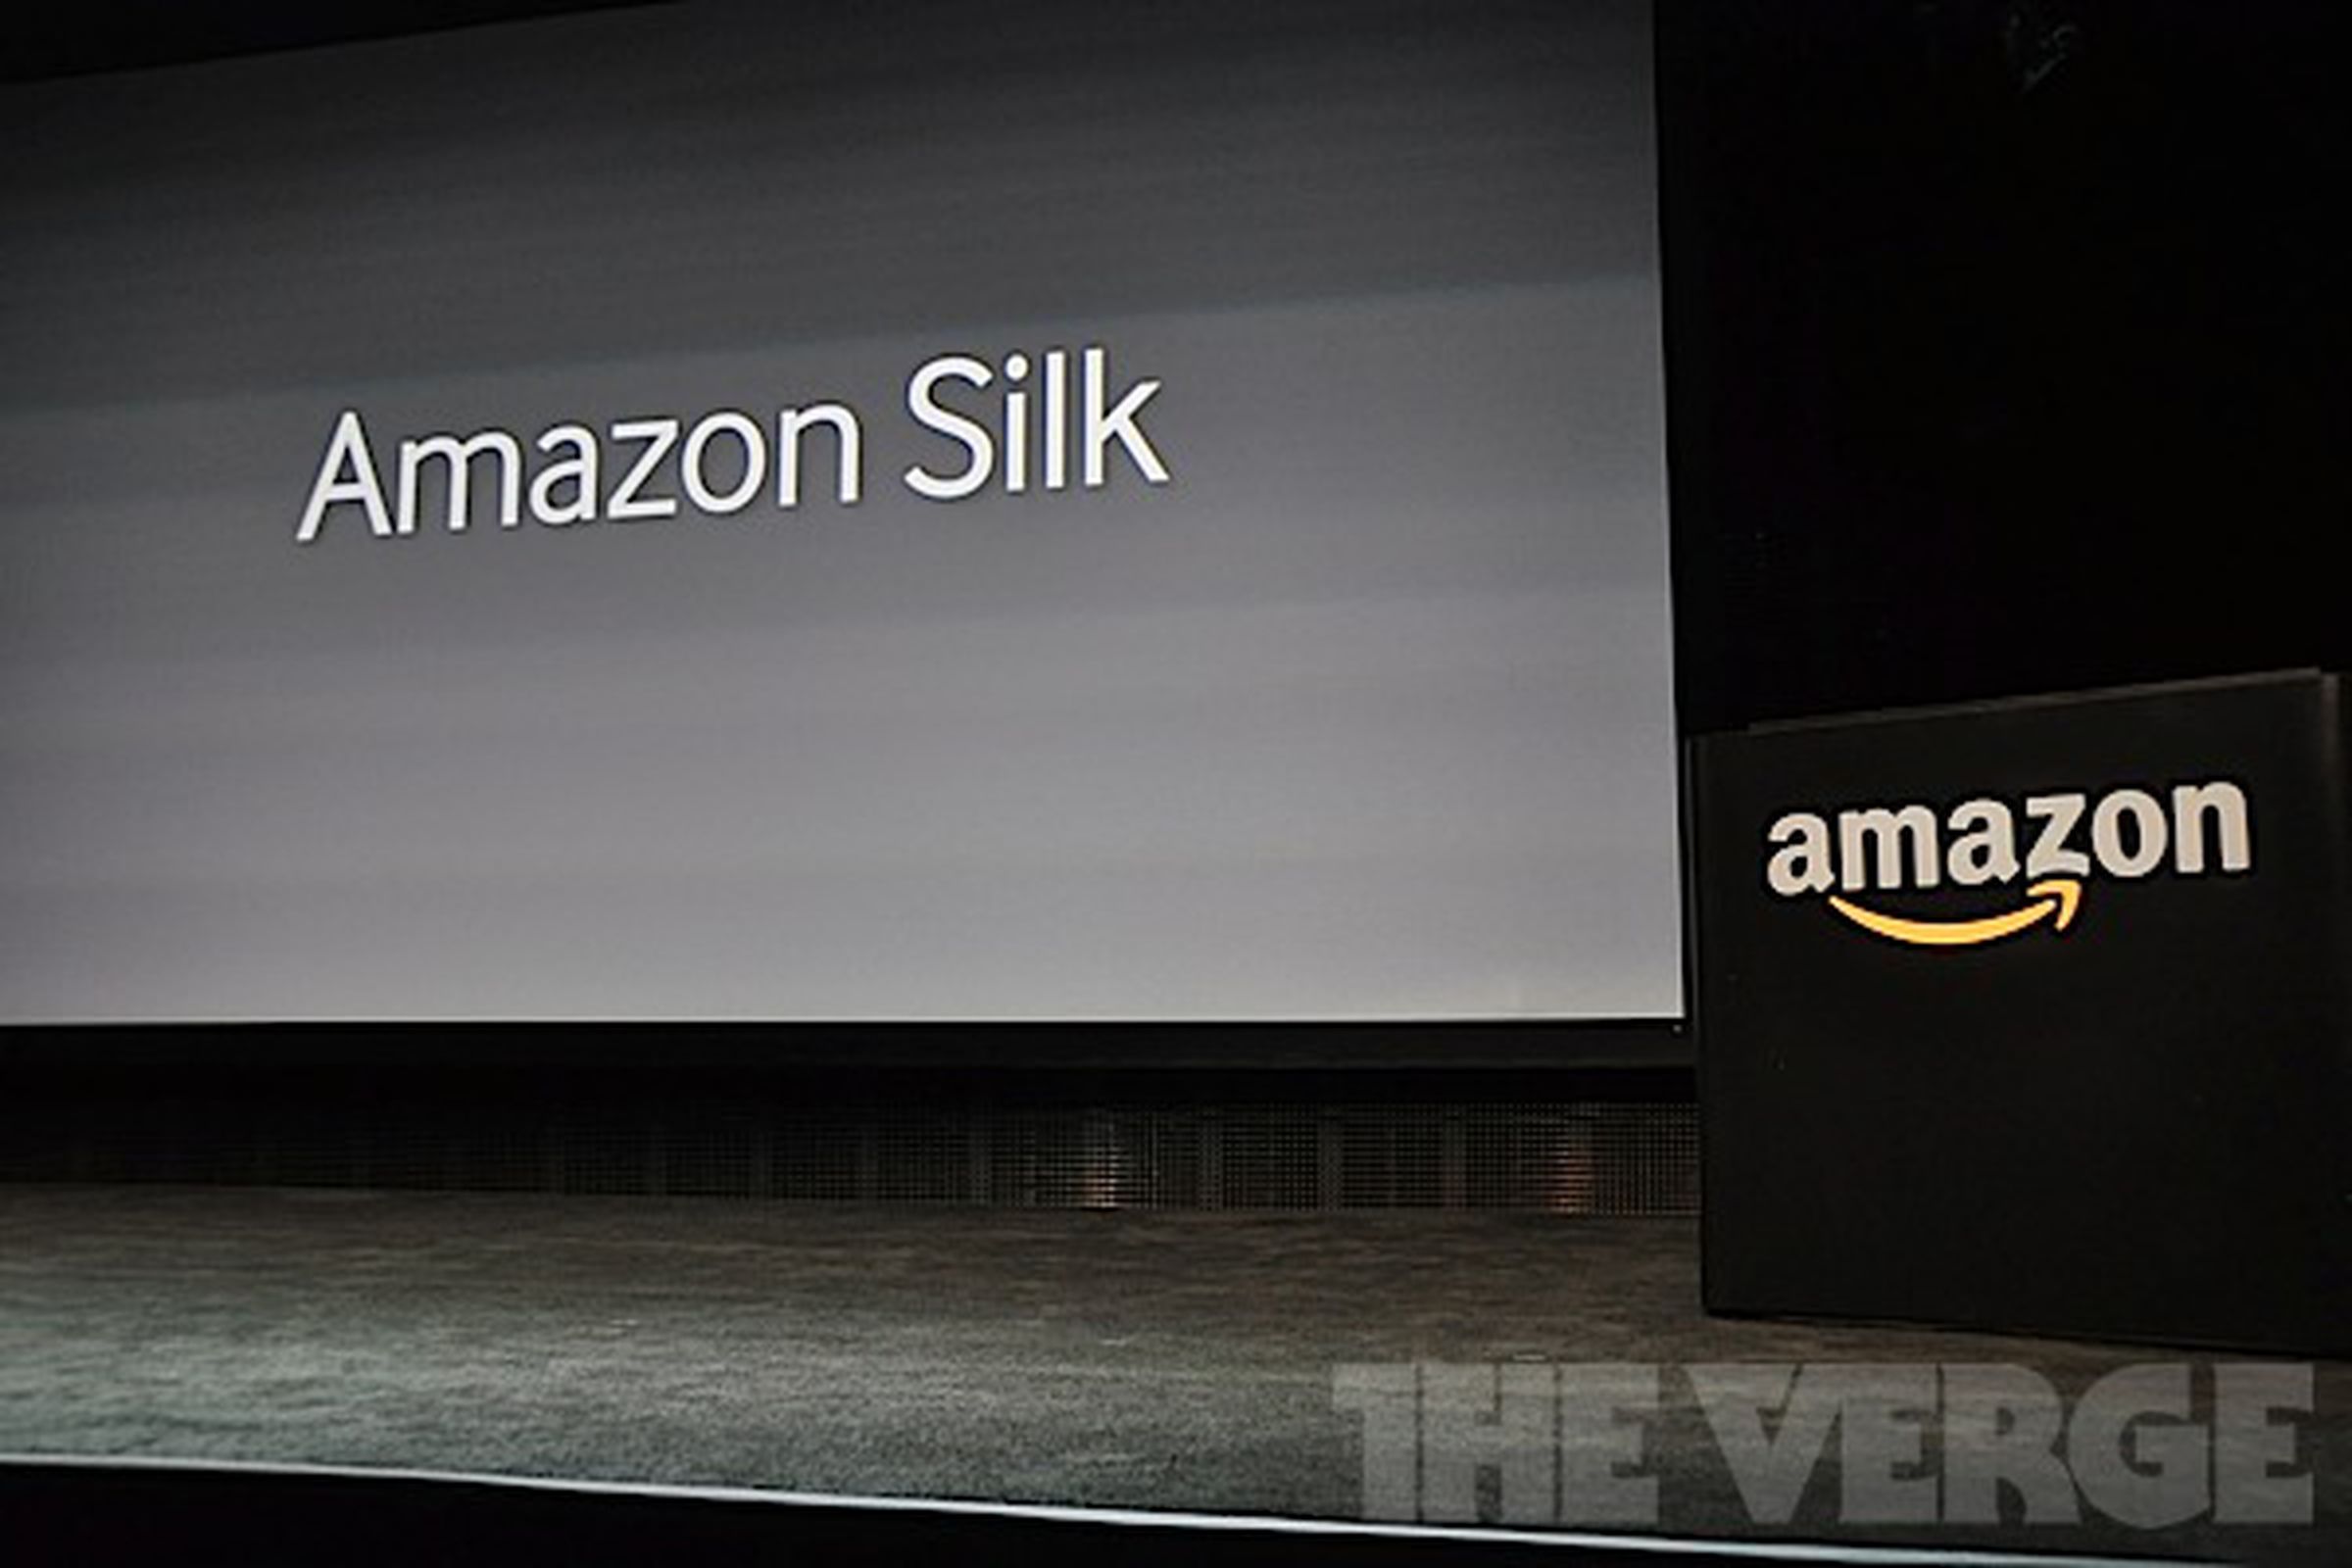 Amazon Silk browser